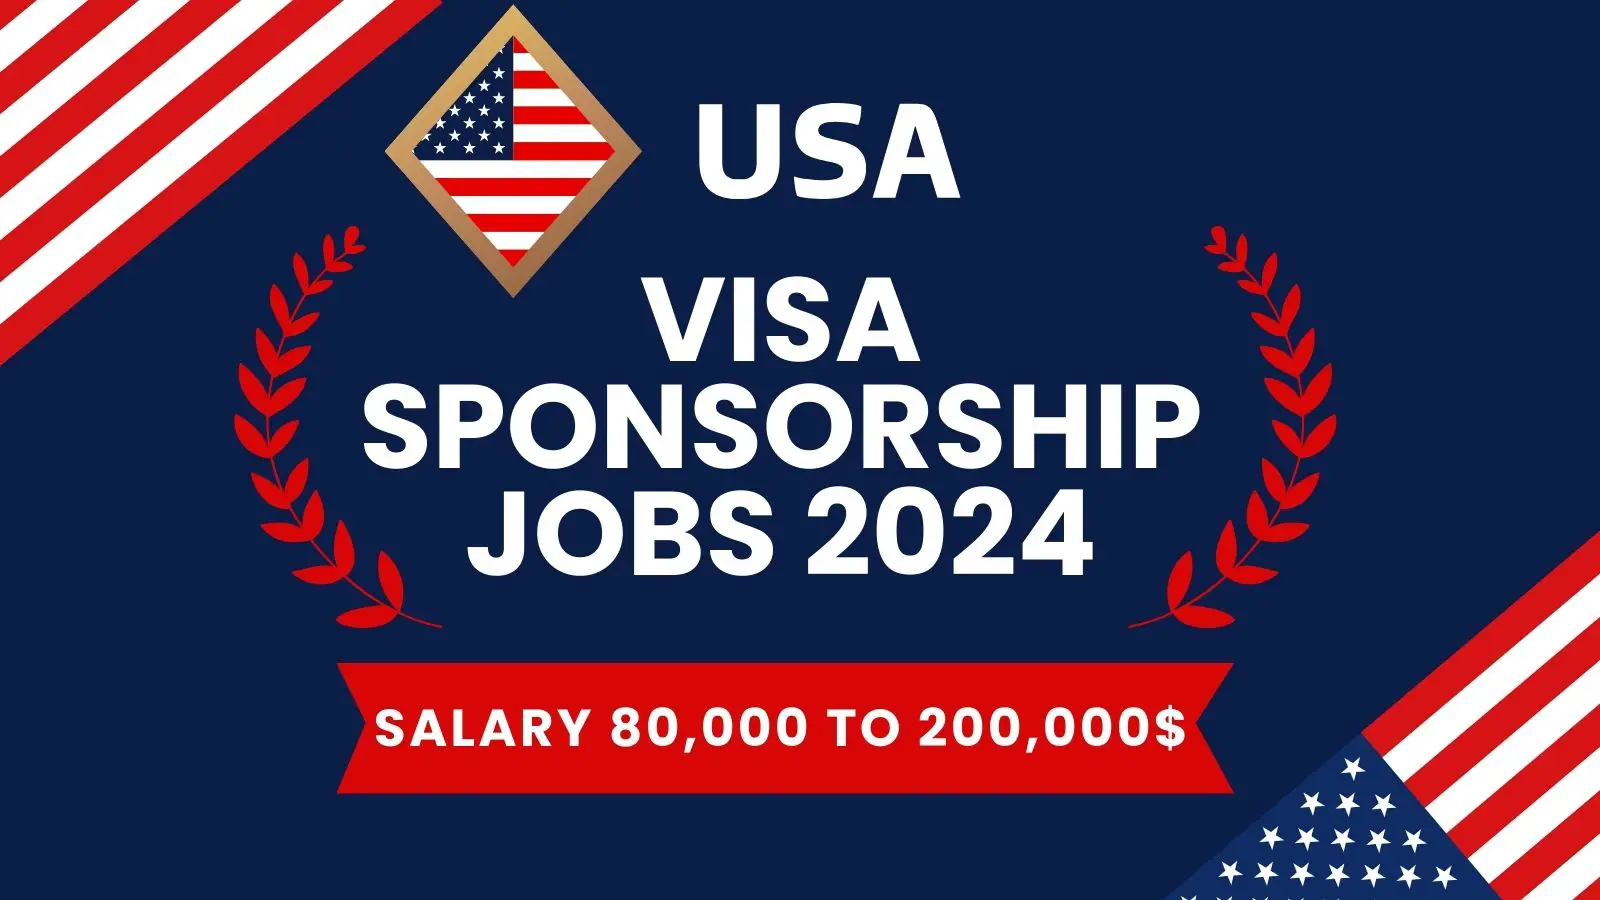 USA Visa Sponsorship Jobs 2024.webp